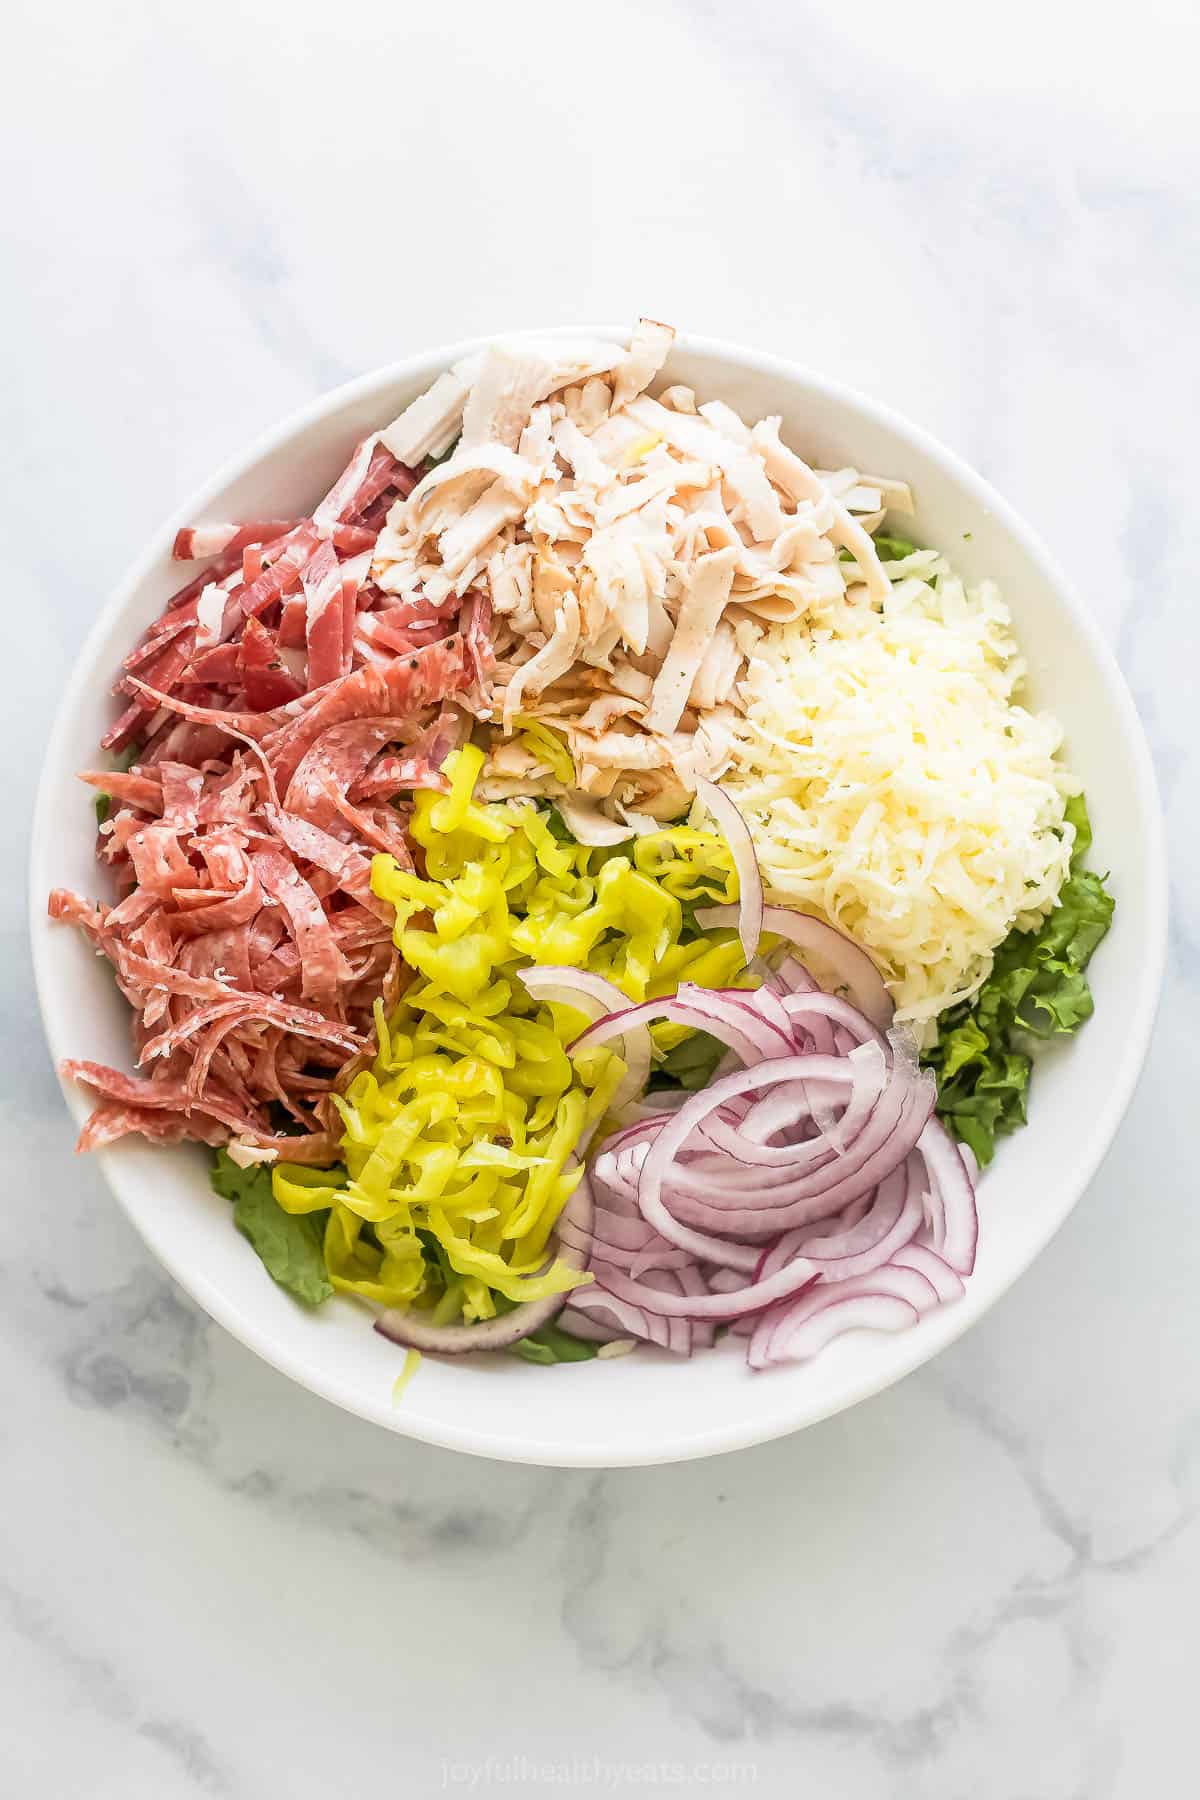 Salad ingredients in a large bowl. 